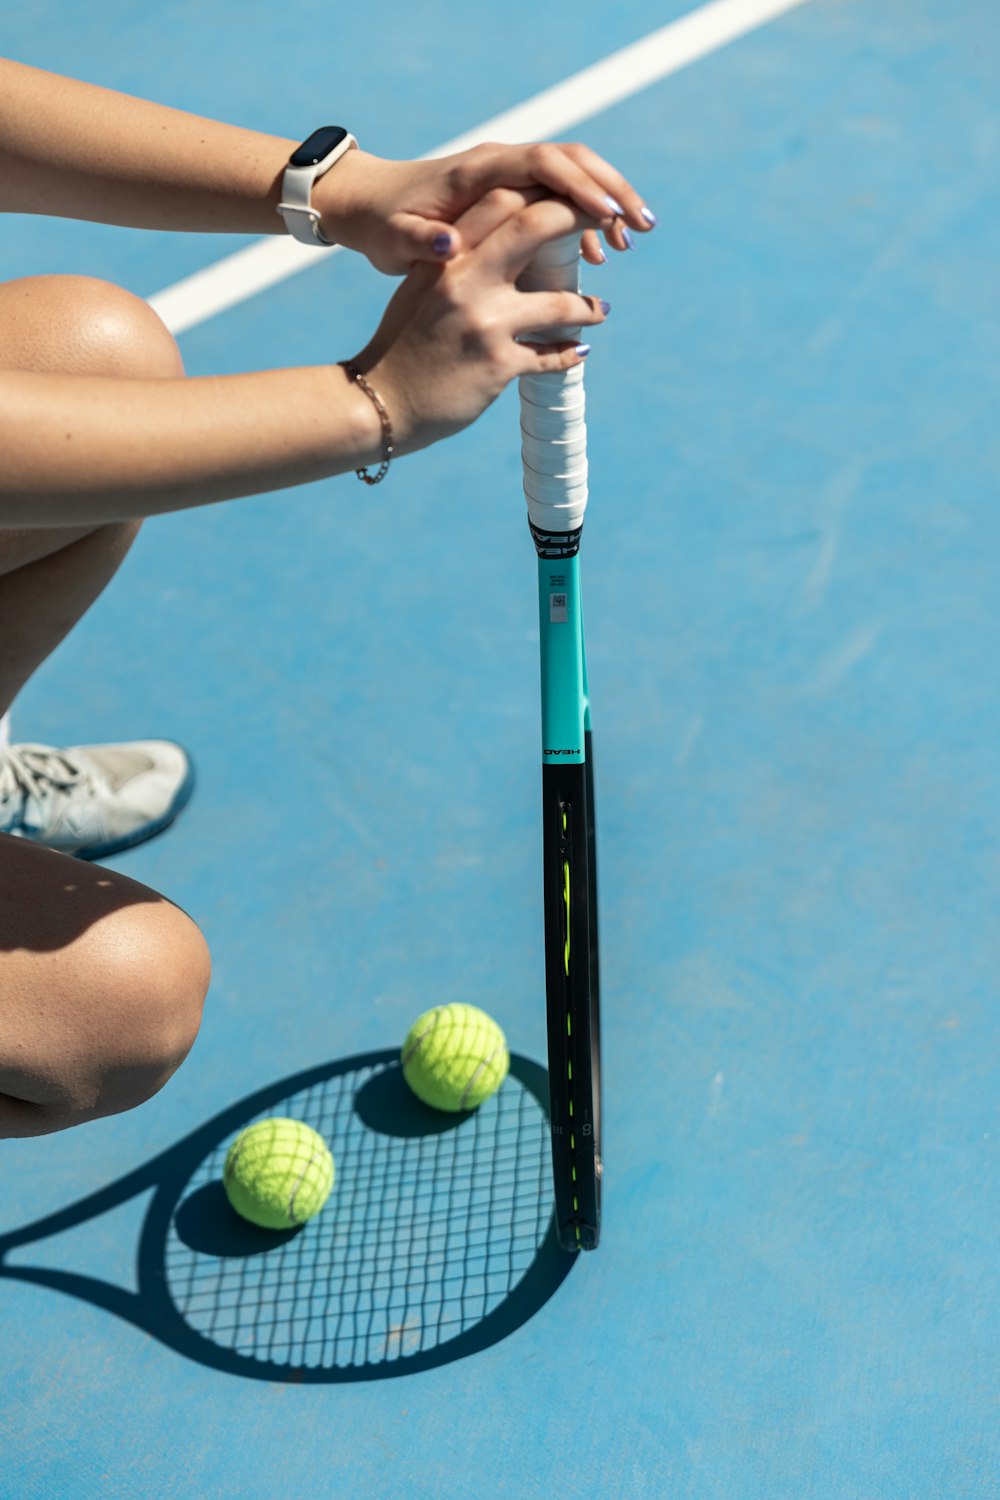 a woman kneeling down on a tennis court holding a racquet